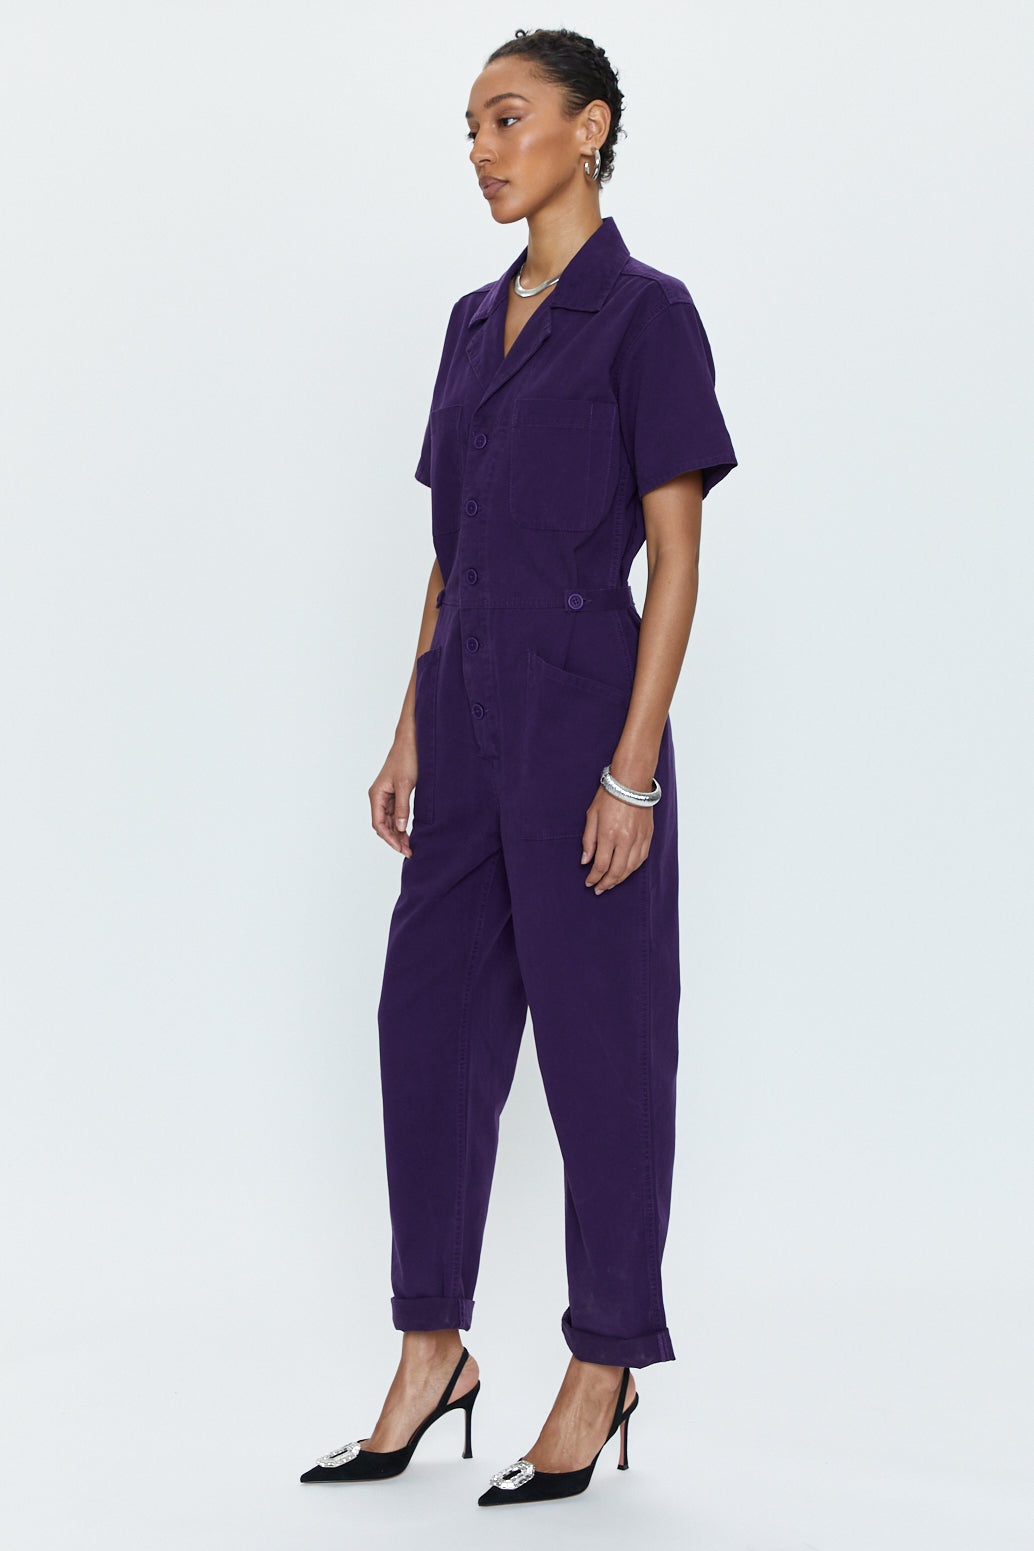 Grover Short Sleeve Field Suit - Lila Purple